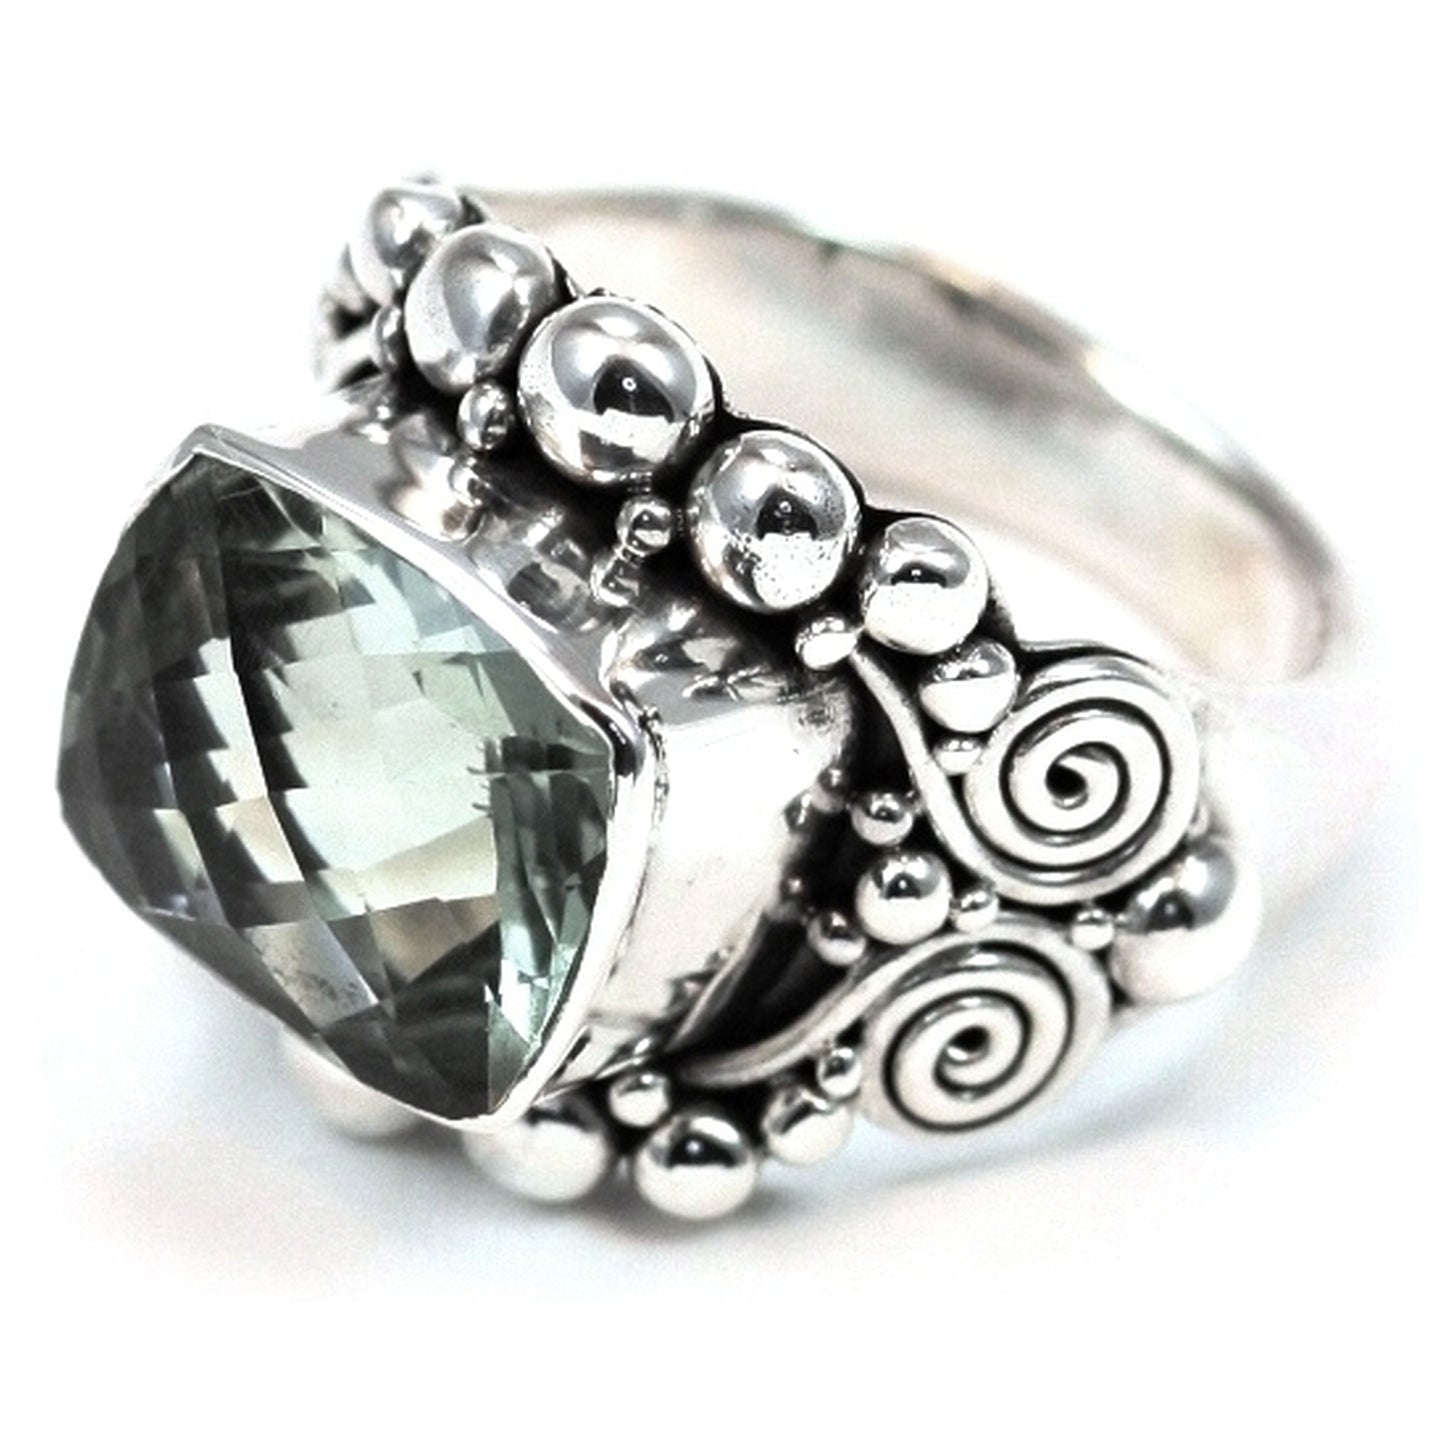 Silver ring with green amethyst gemstone.